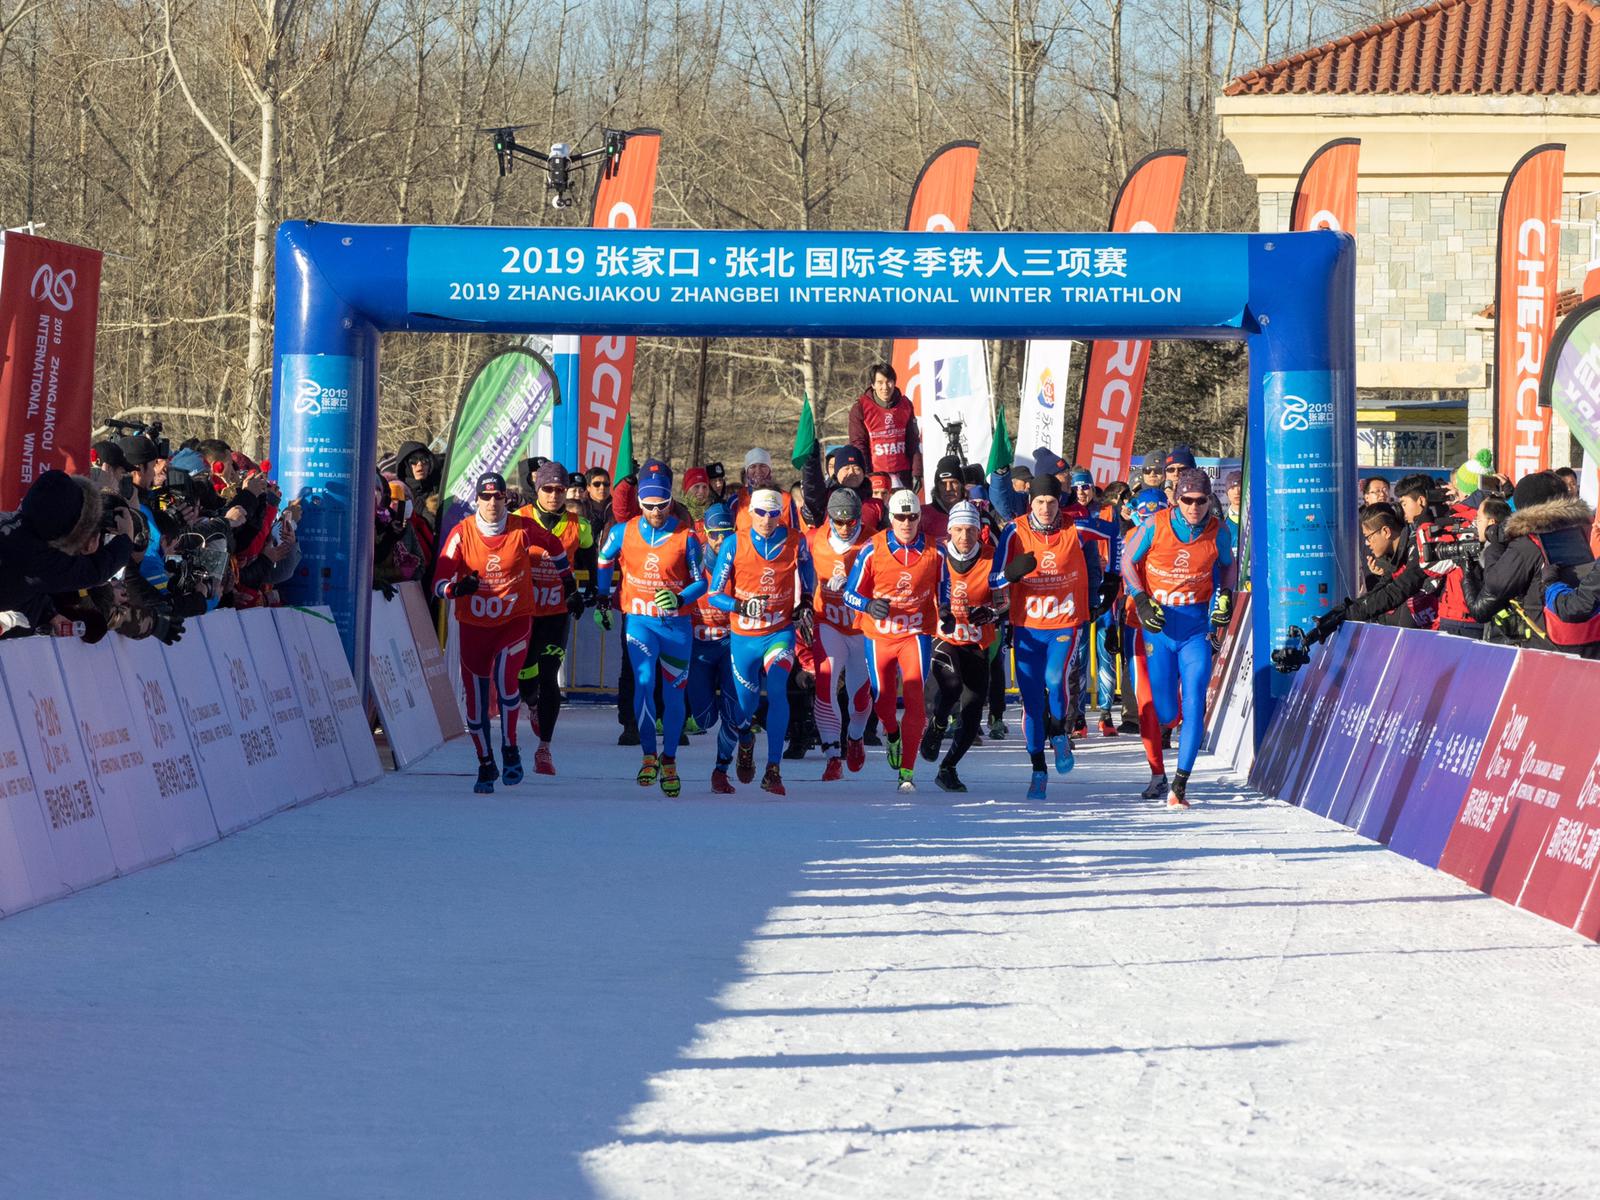 International Winter Triathlon Test Event: Antonioli 5°, Lamastra 6° a Zhangjiakou